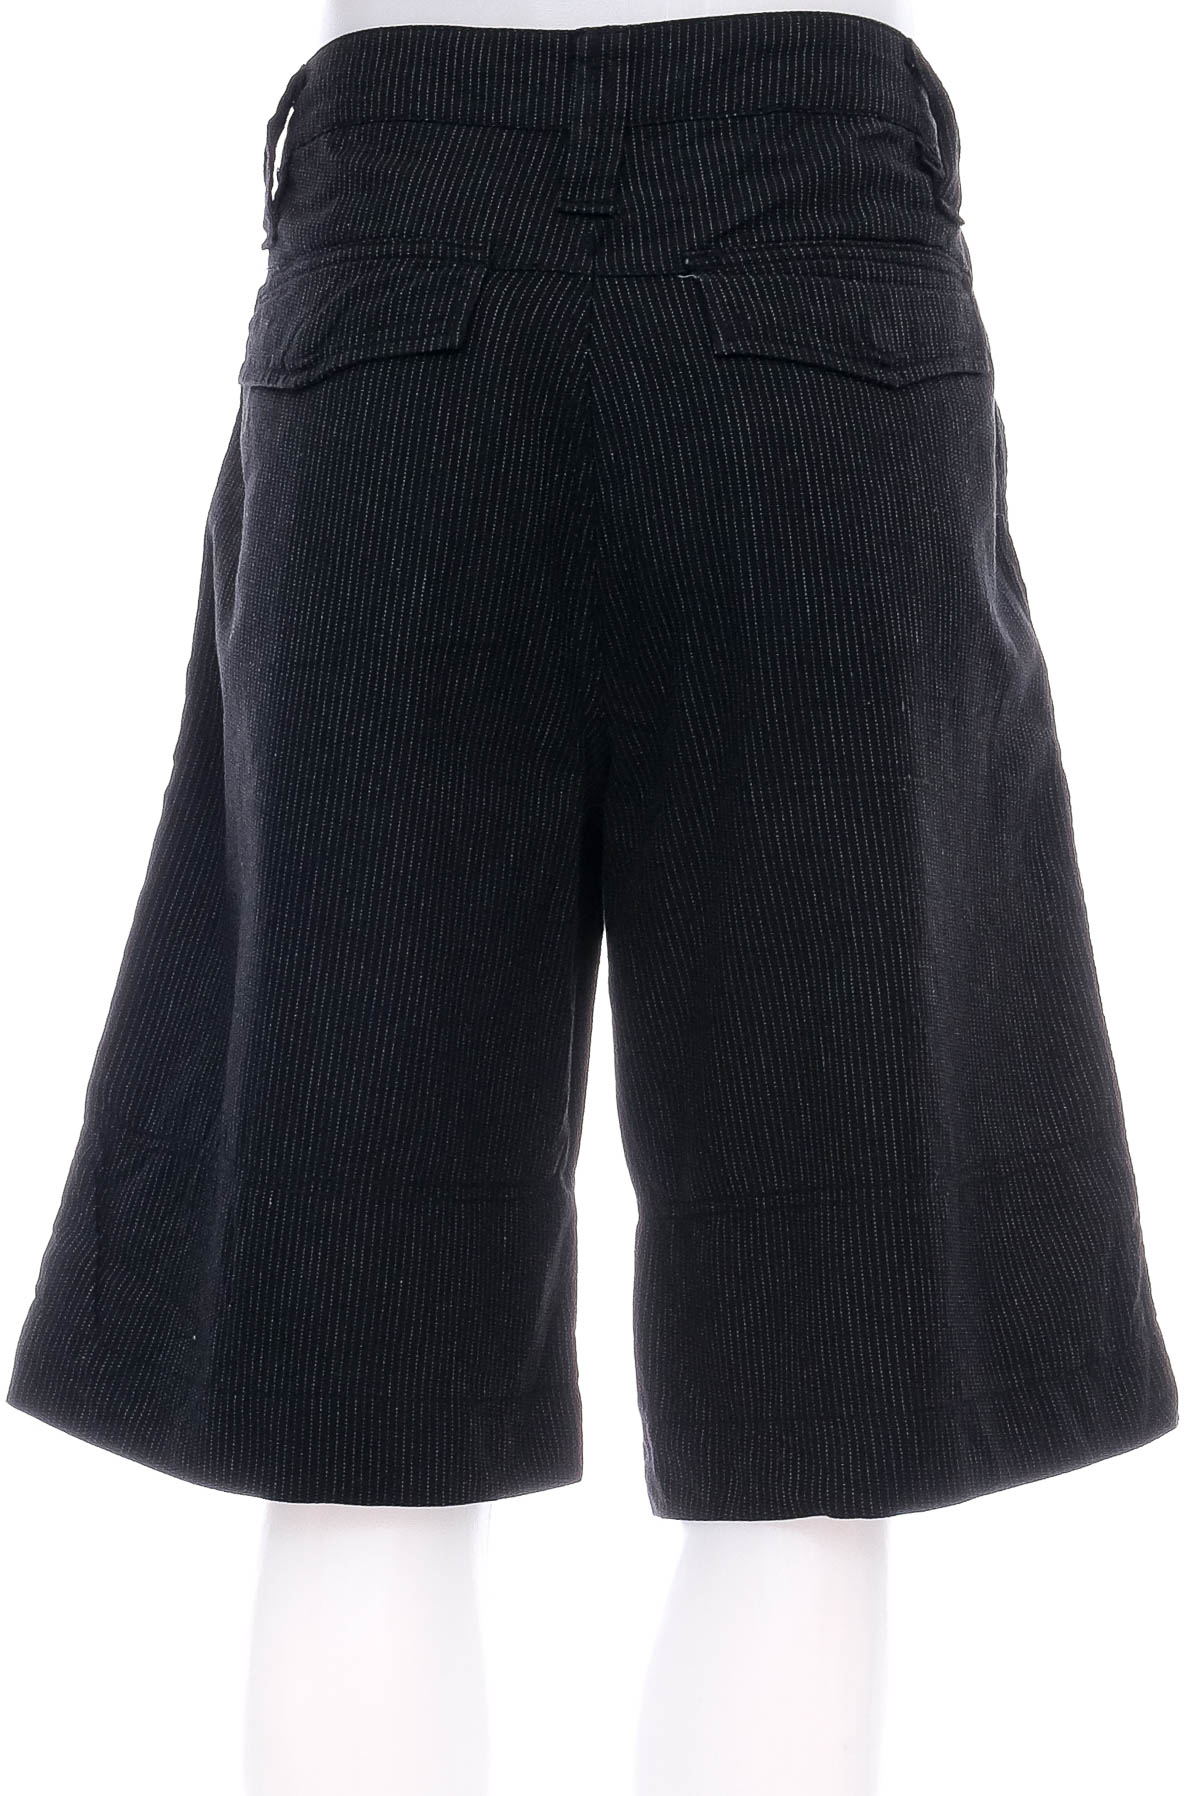 Men's shorts - GUESS - 1